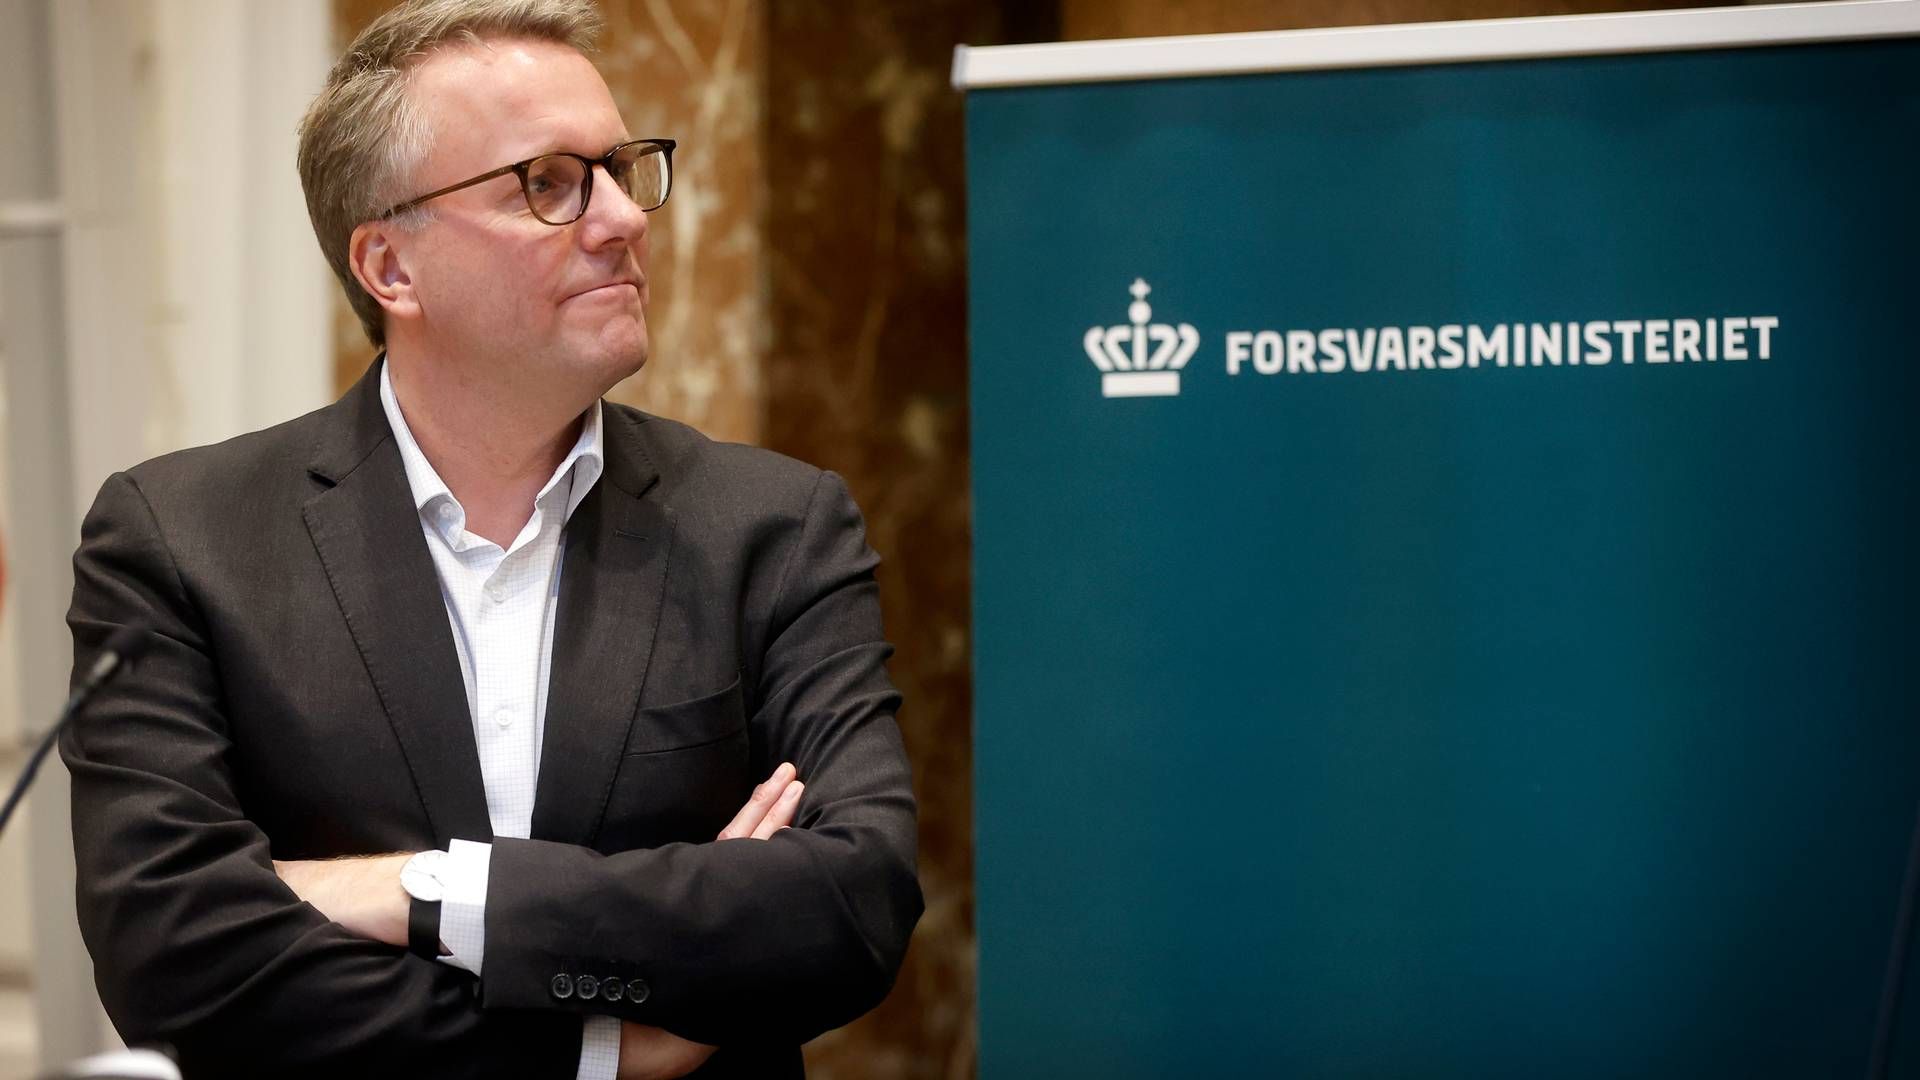 Forsvarsminister Morten Bødskov. | Foto: Jens Dresling/Ritzau Scanpix